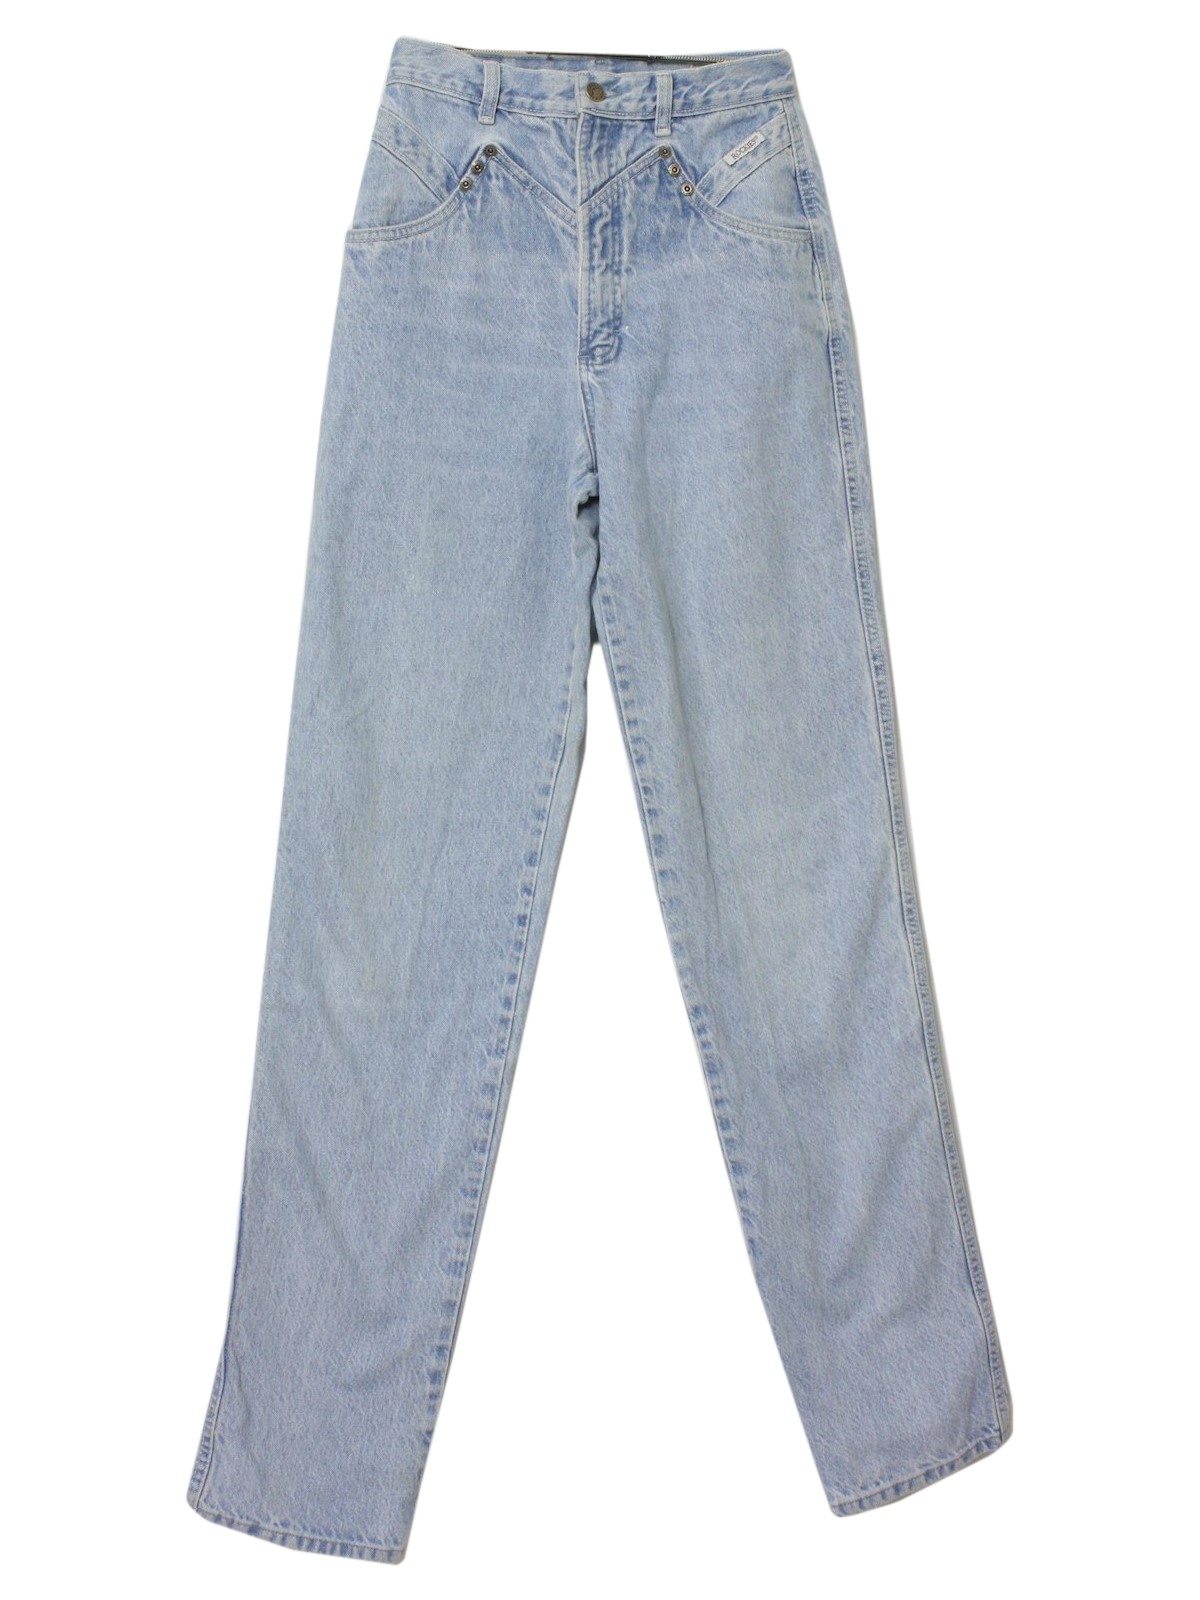 90's rockies jeans